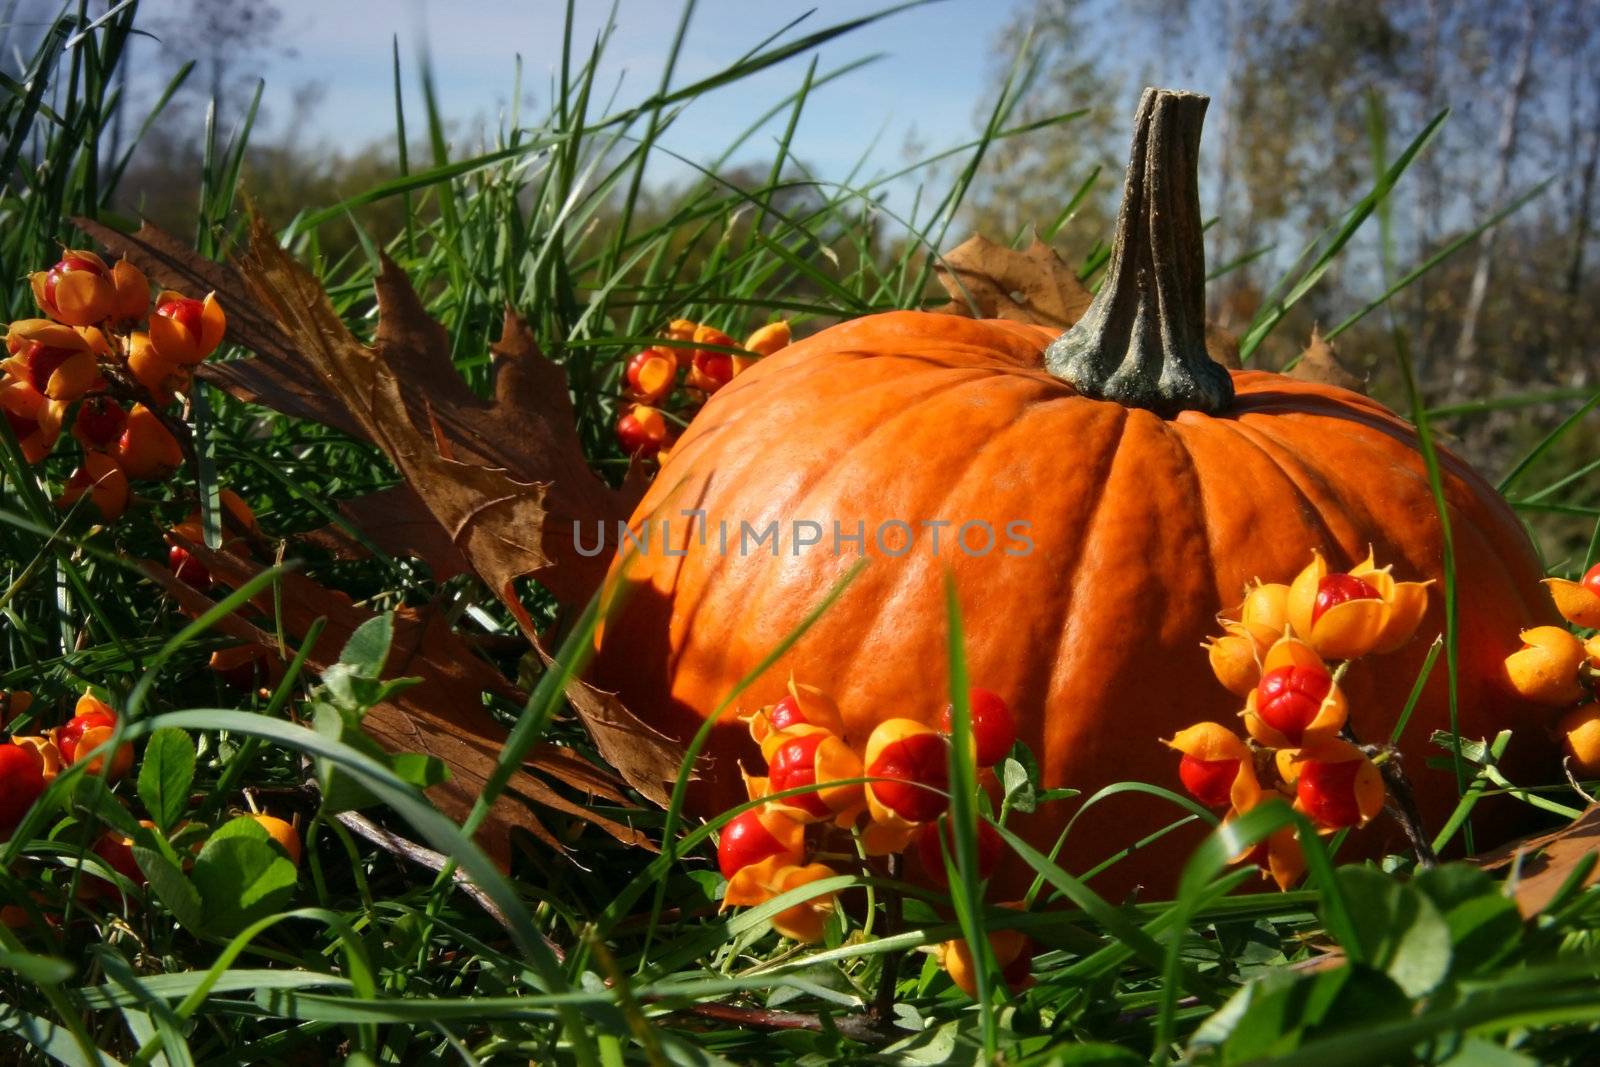 Pumpkins in the grass among fallen leaves